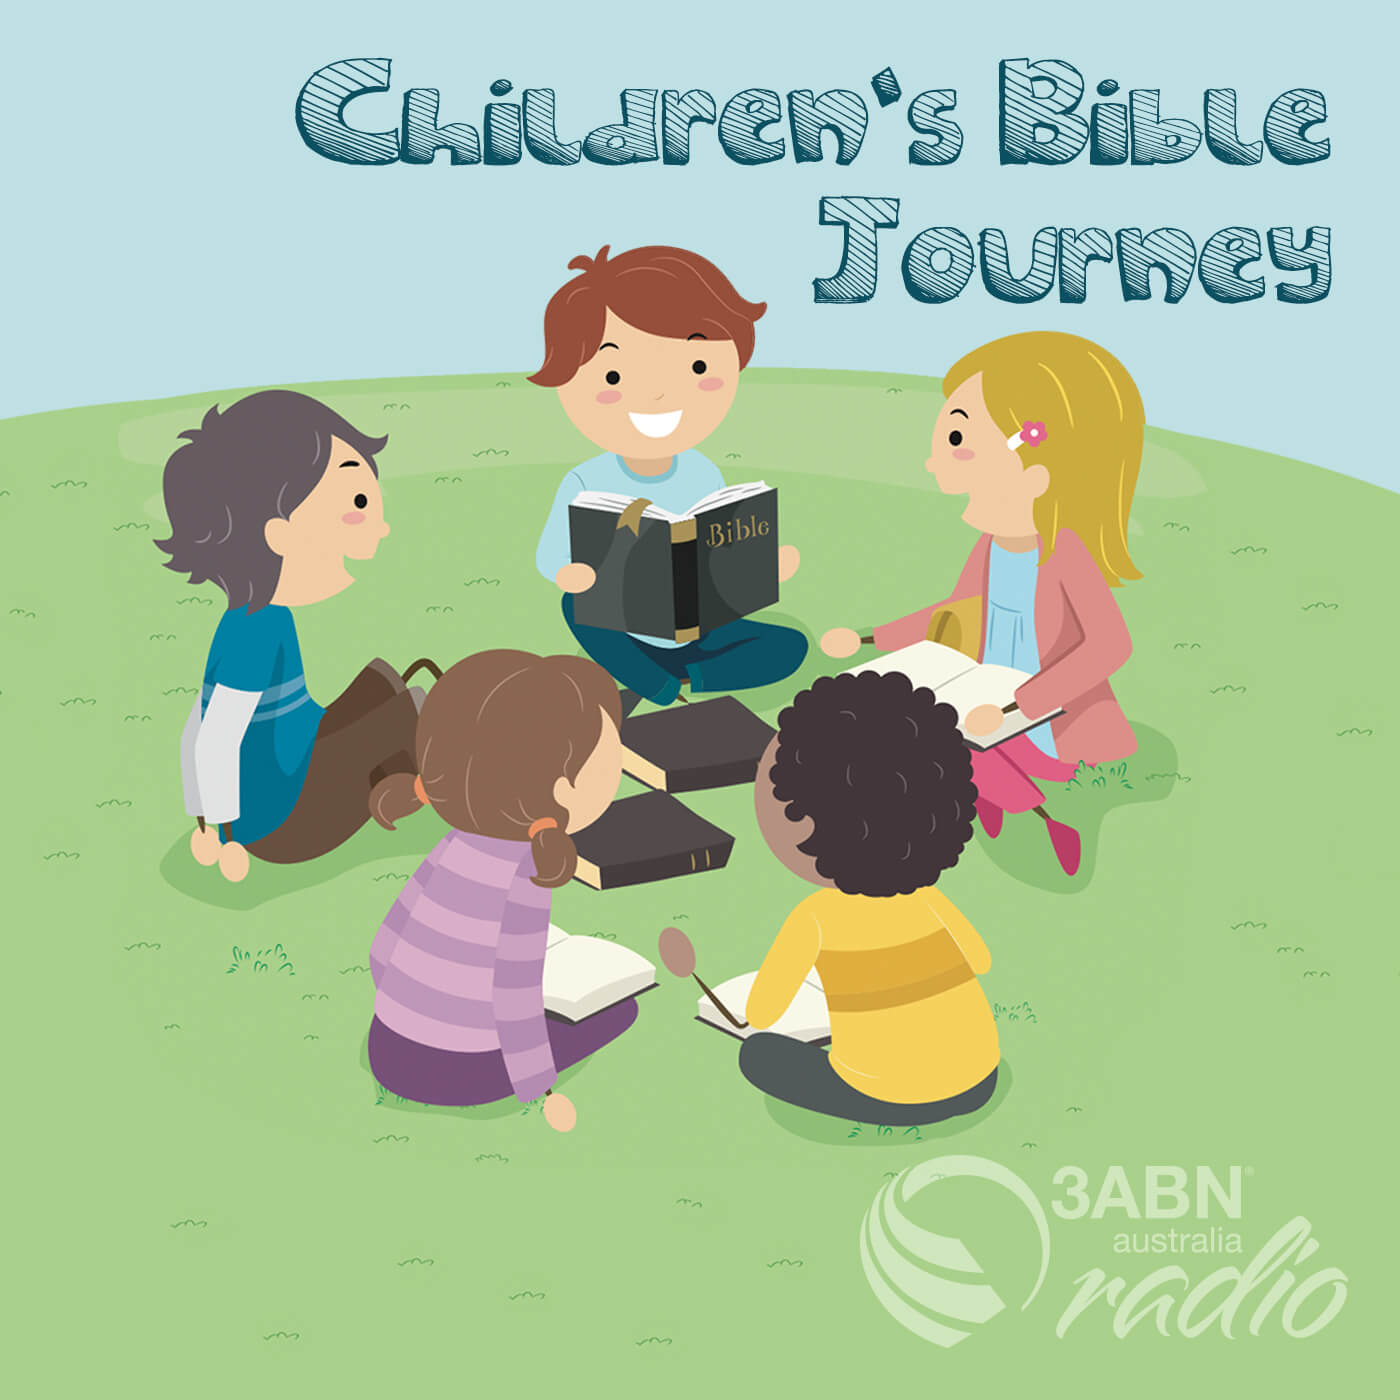 Children's Bible Journey - 2129